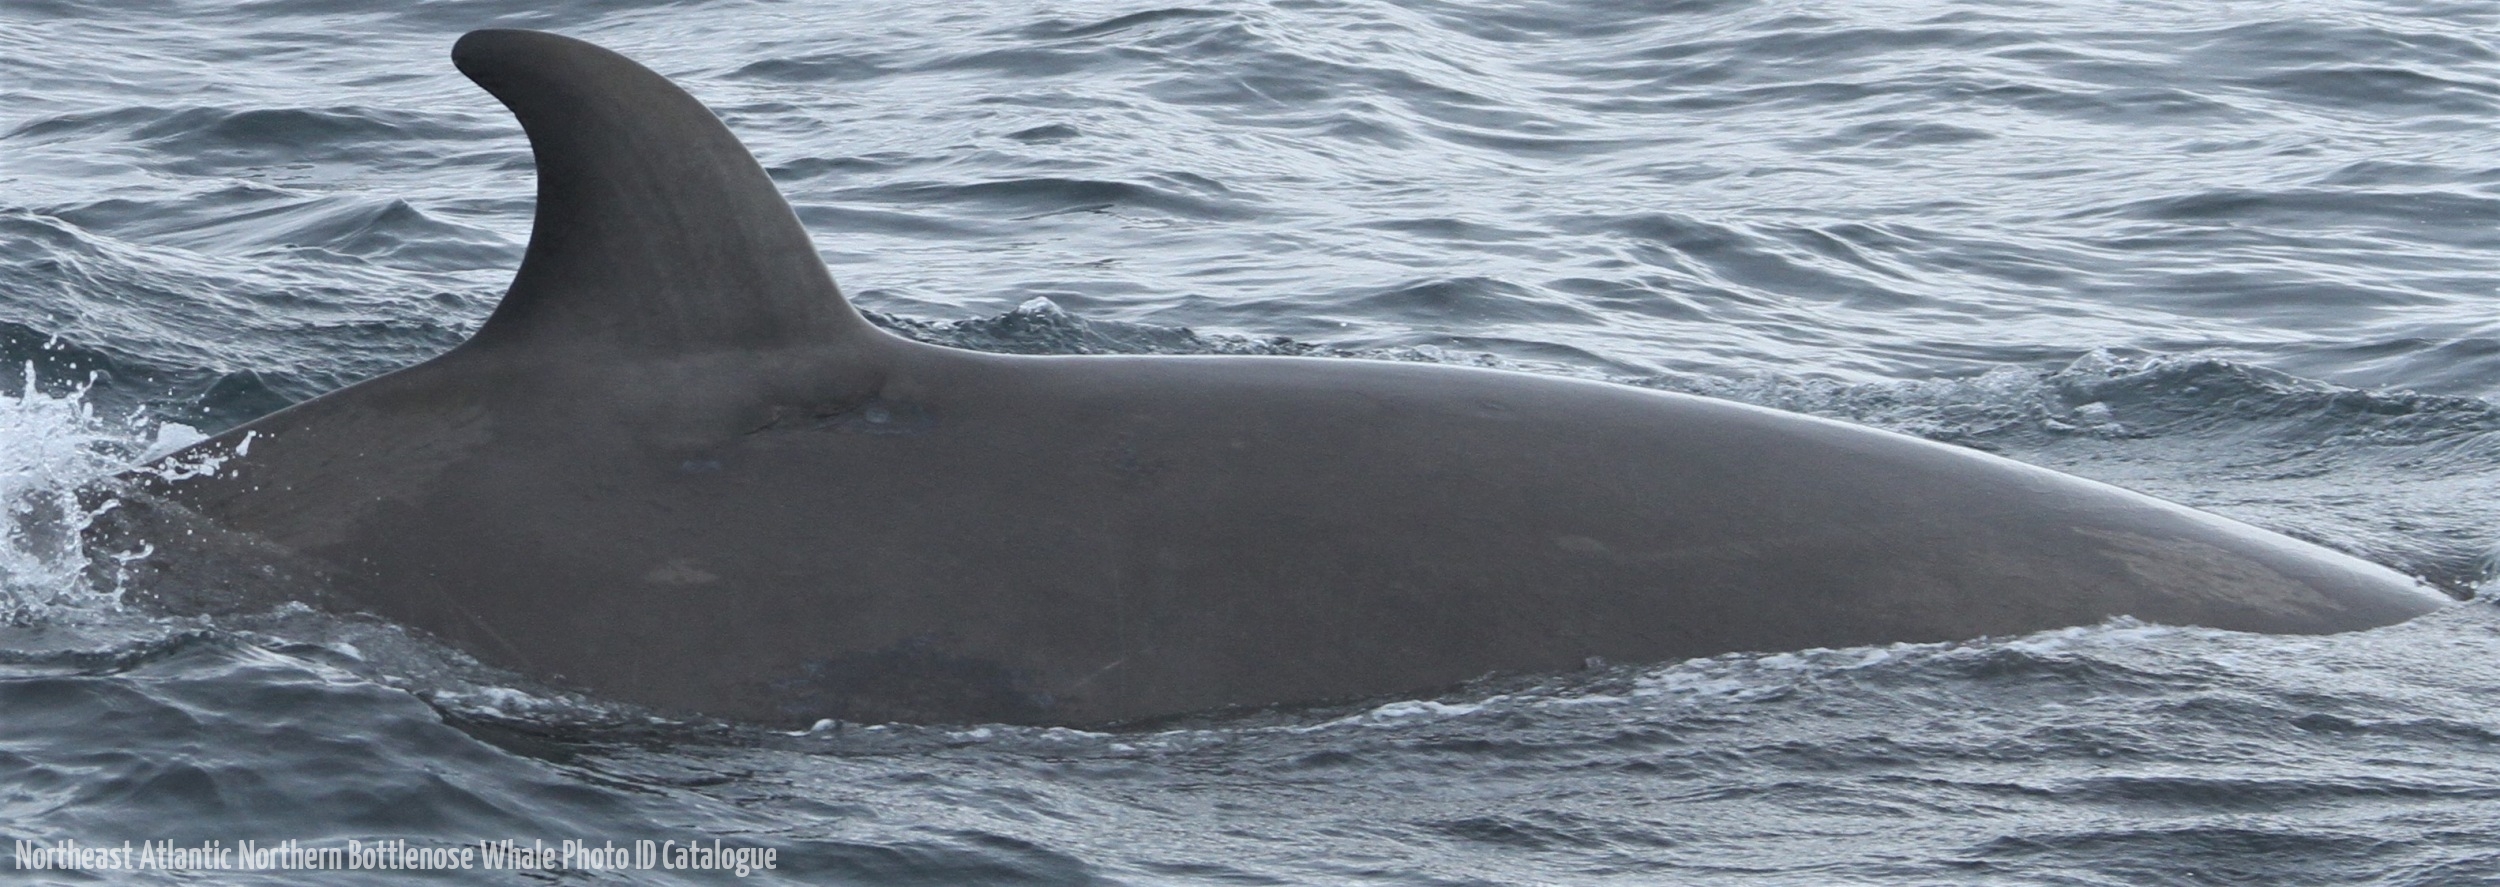 Whale ID: 0273,  Date taken: 03-07-2013,  Photographer: Paul H. Ensor